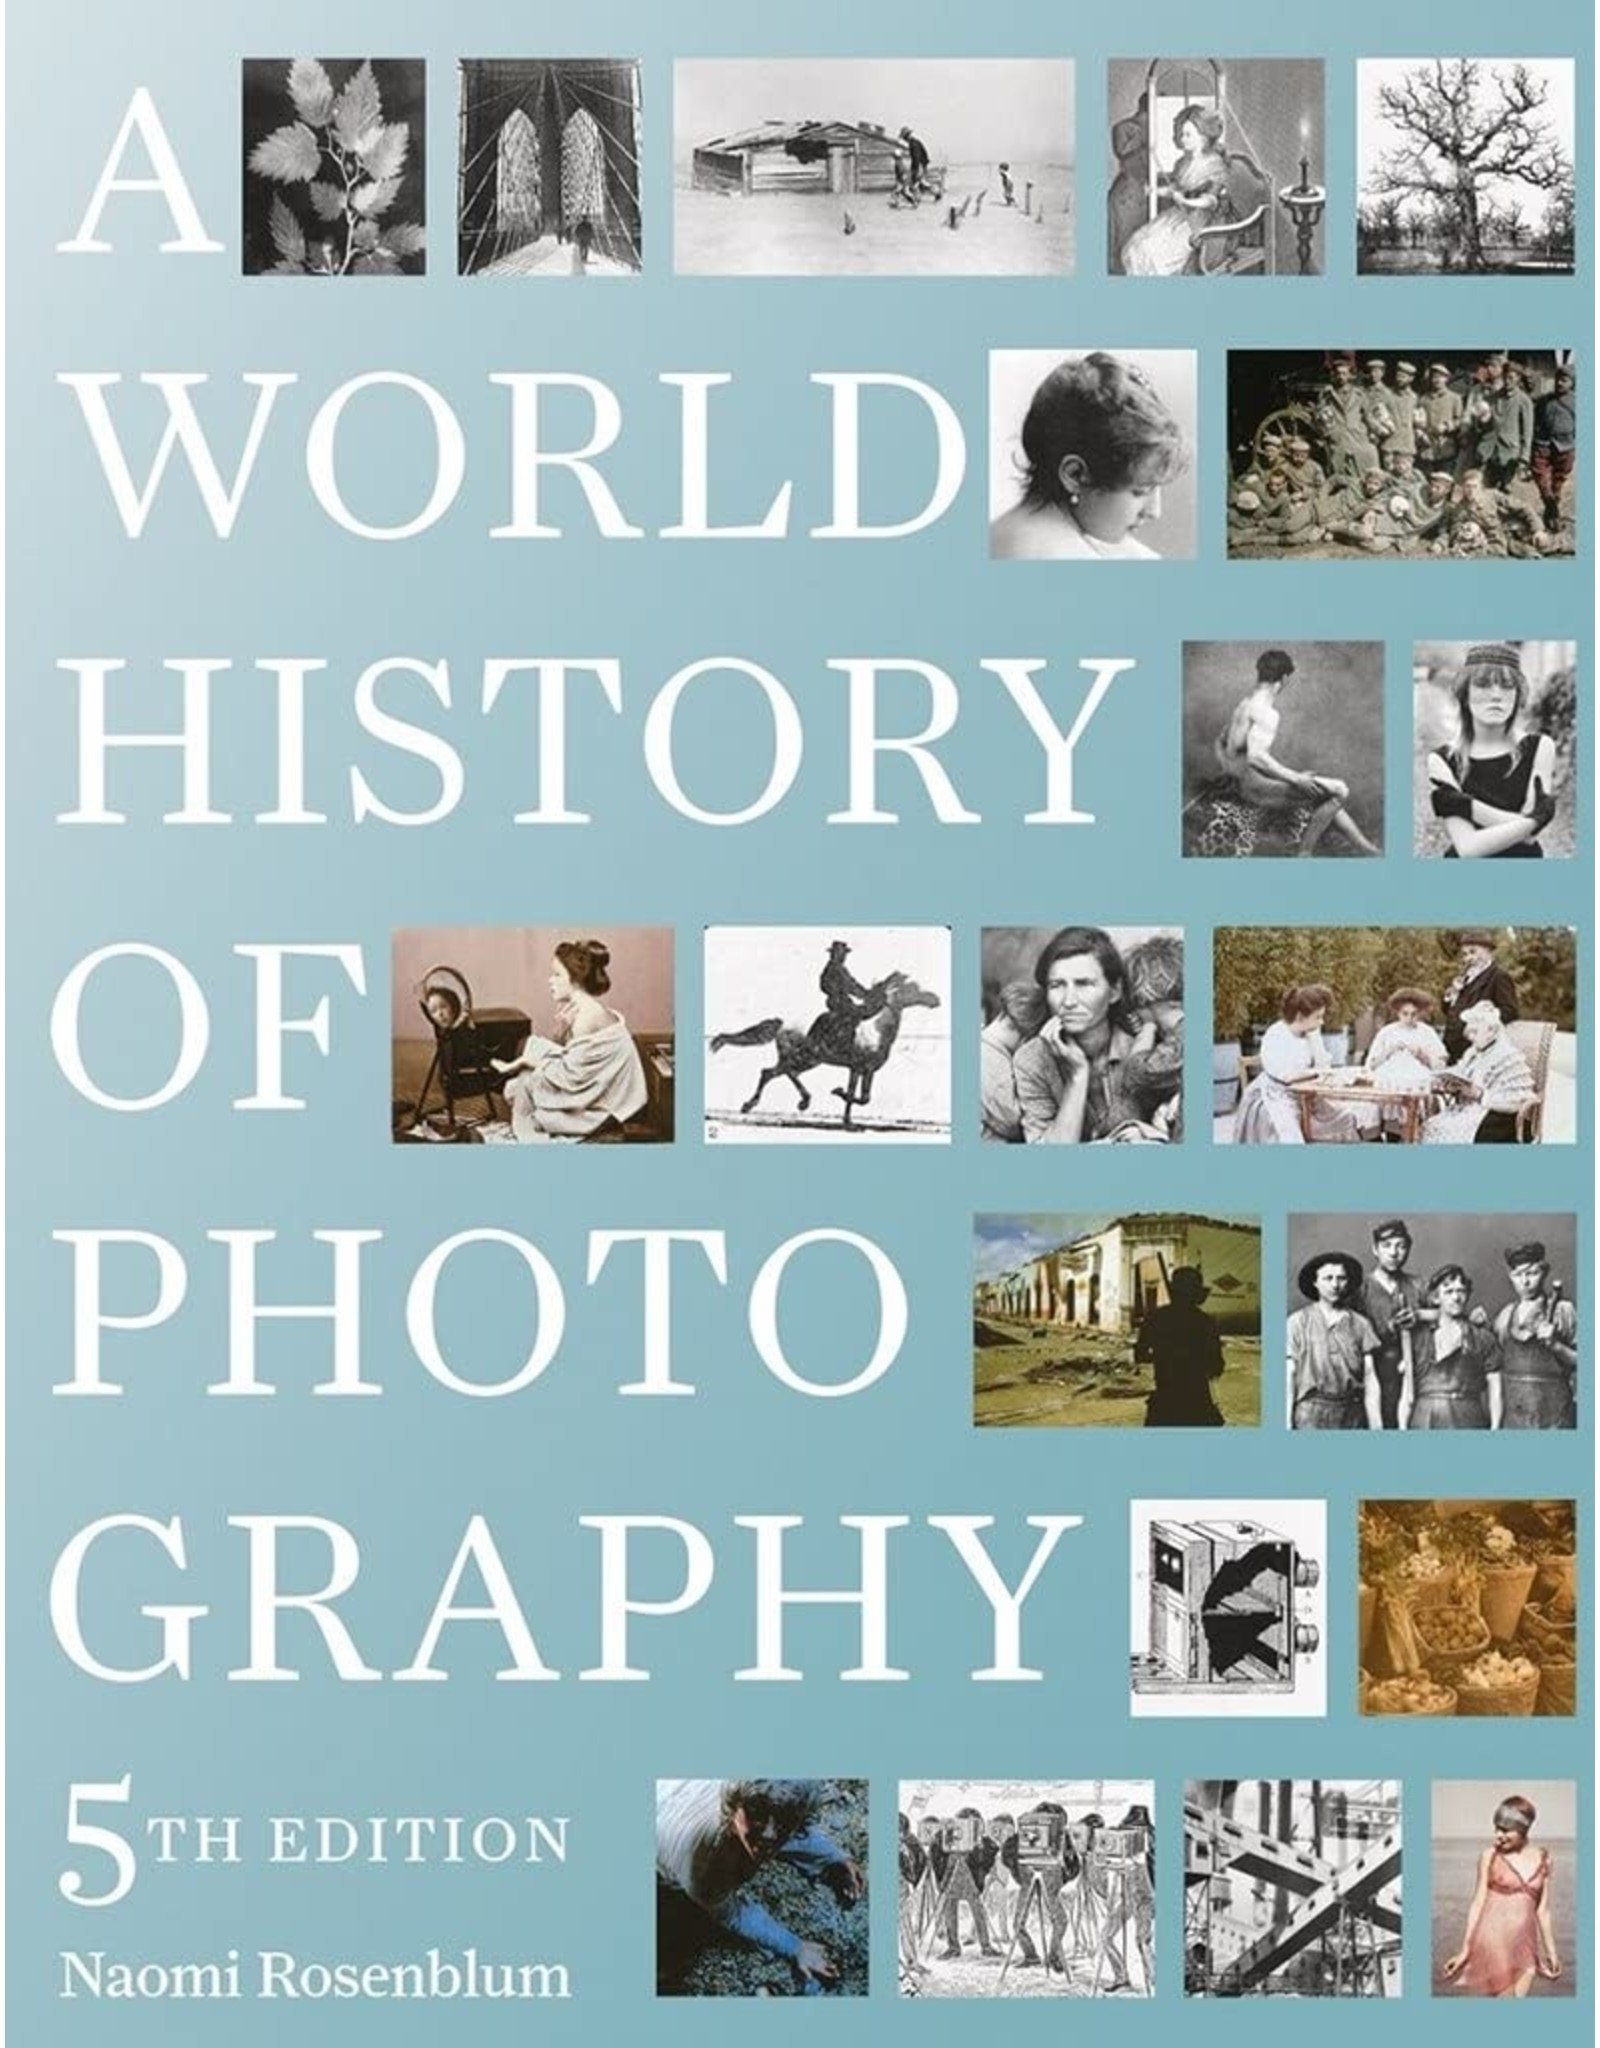 A World History of Photography 5th Edition: Naomi Rosenblum